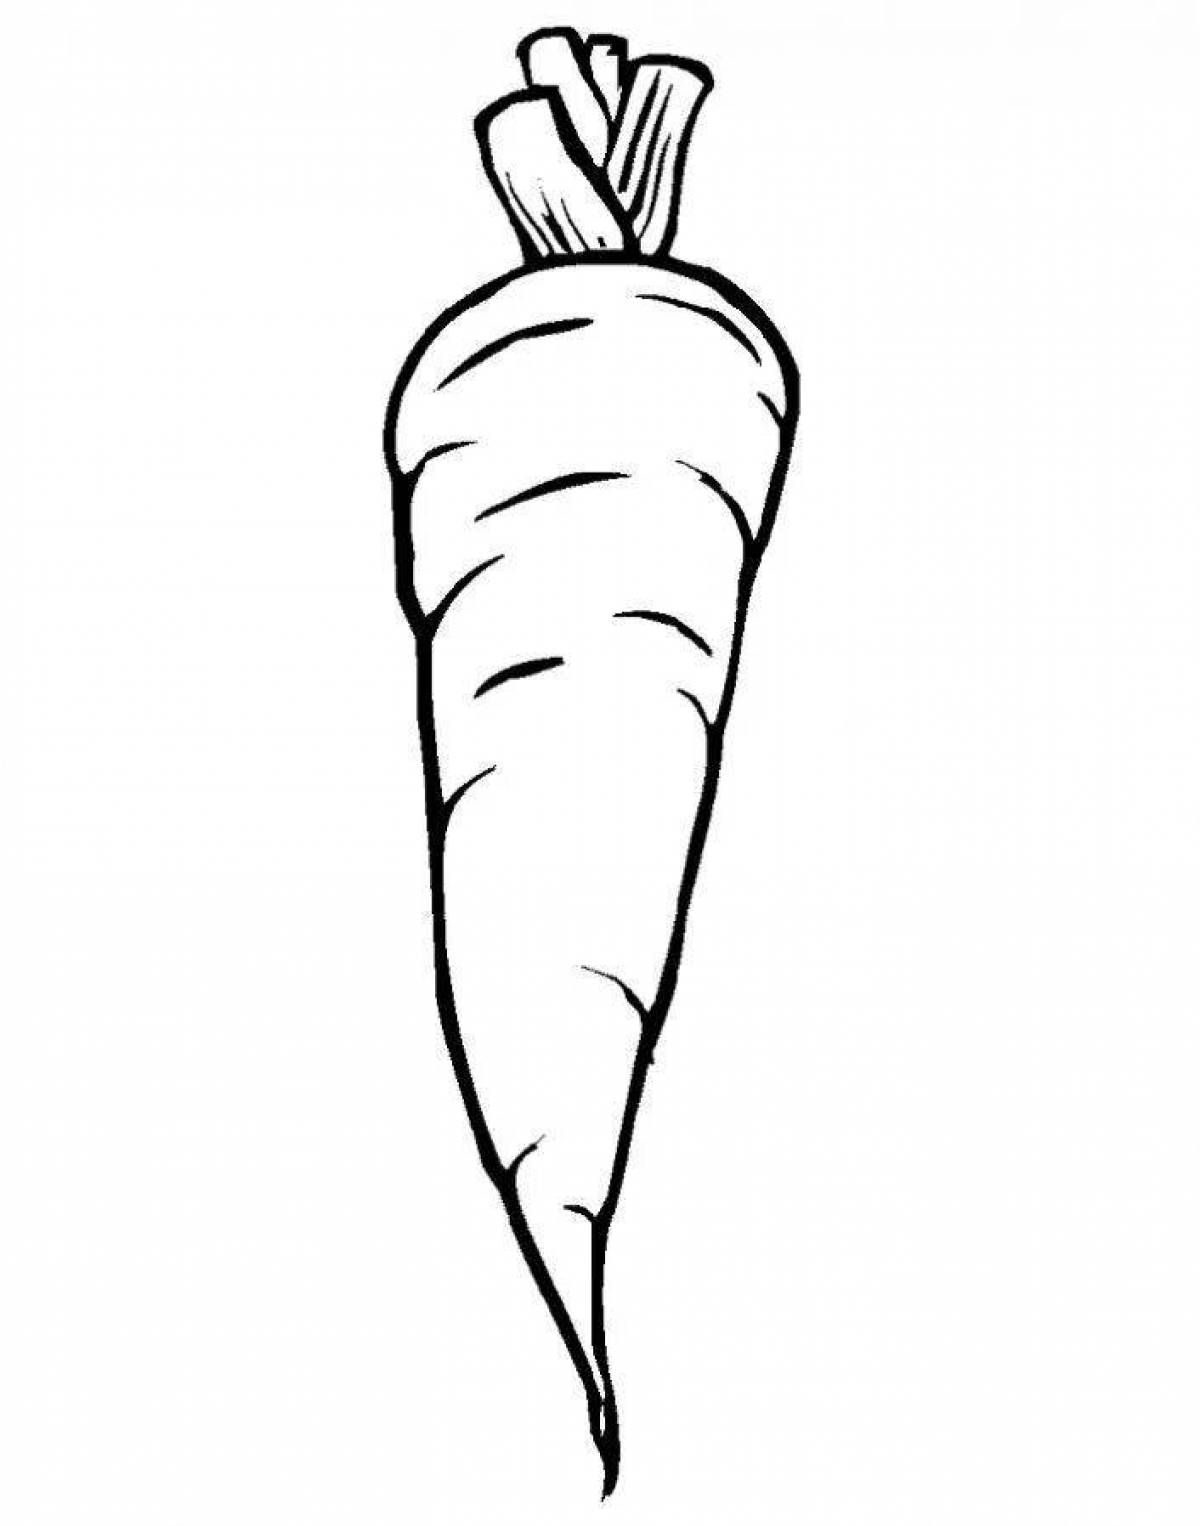 Creative carrot illustration